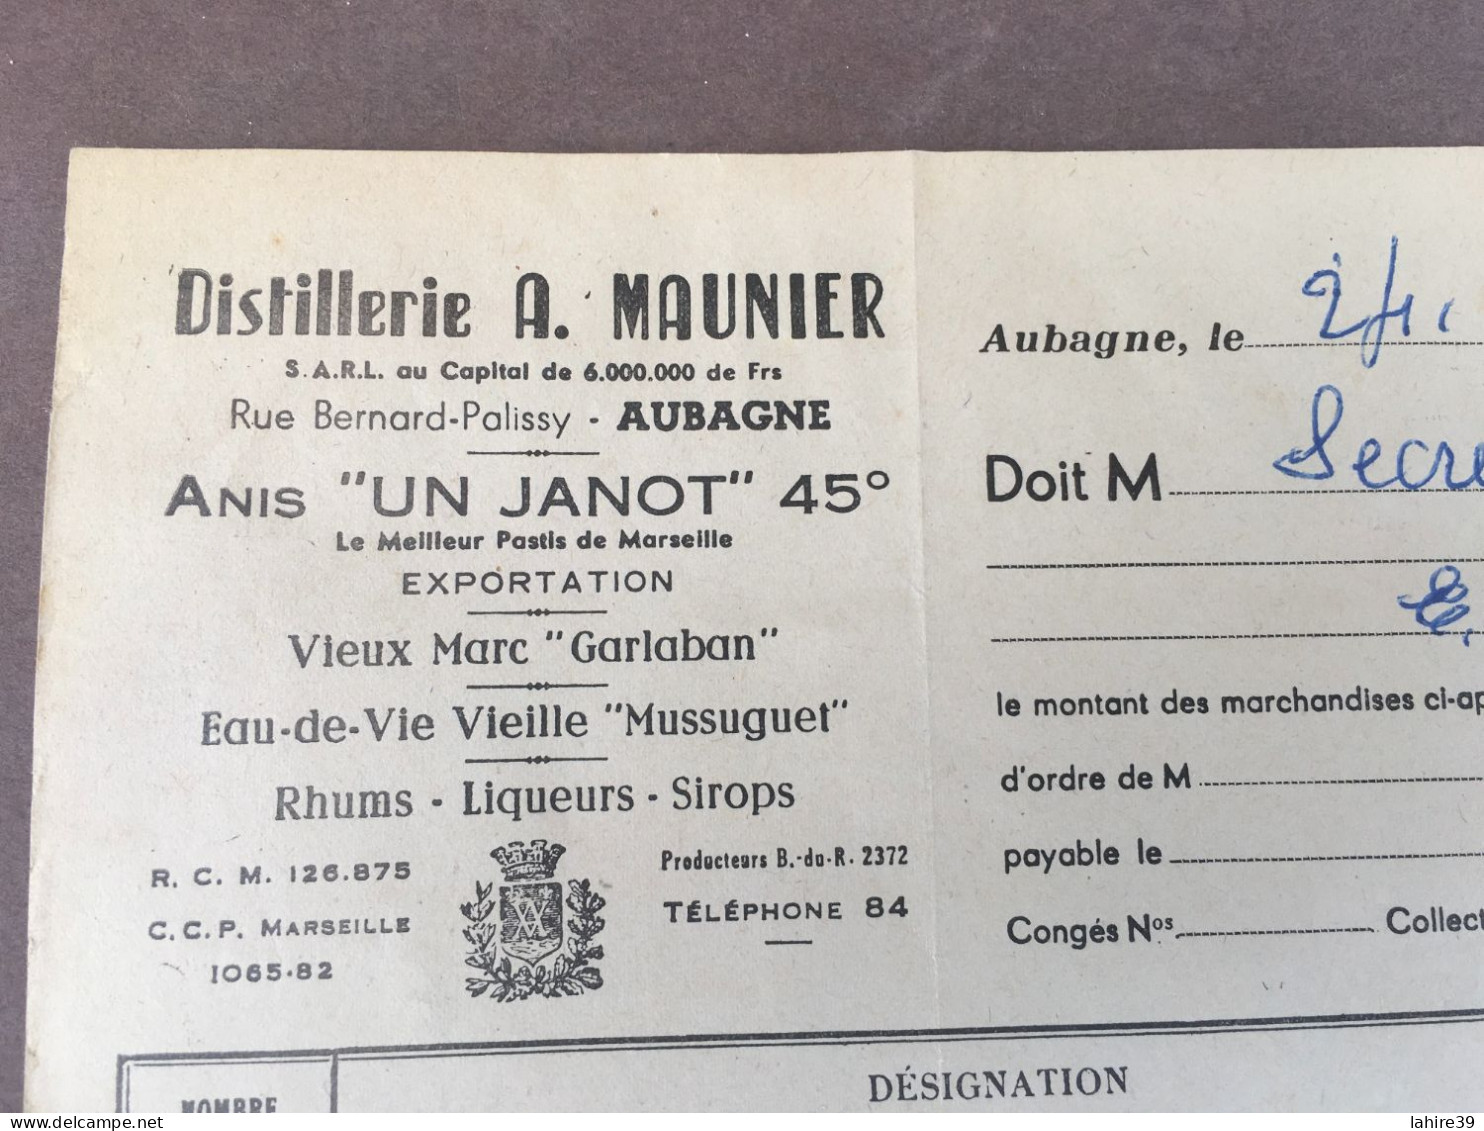 Facture / Distillerie A. Maunier / Aubagne / Alcool / Anis Janot 45 / 1955 - Food